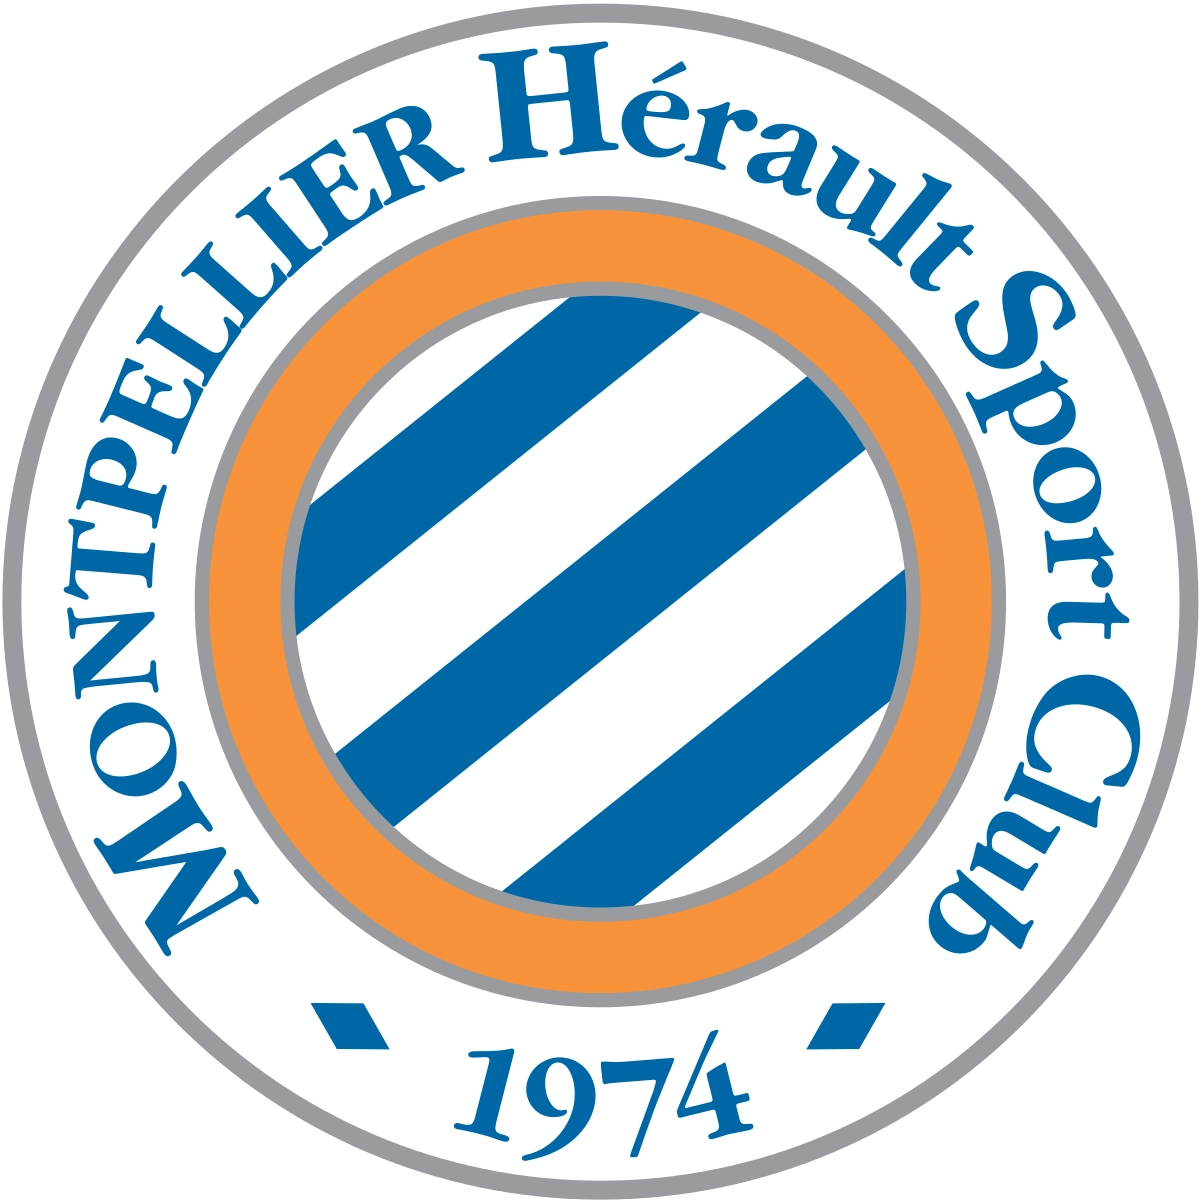 Montpellier Hérault logo